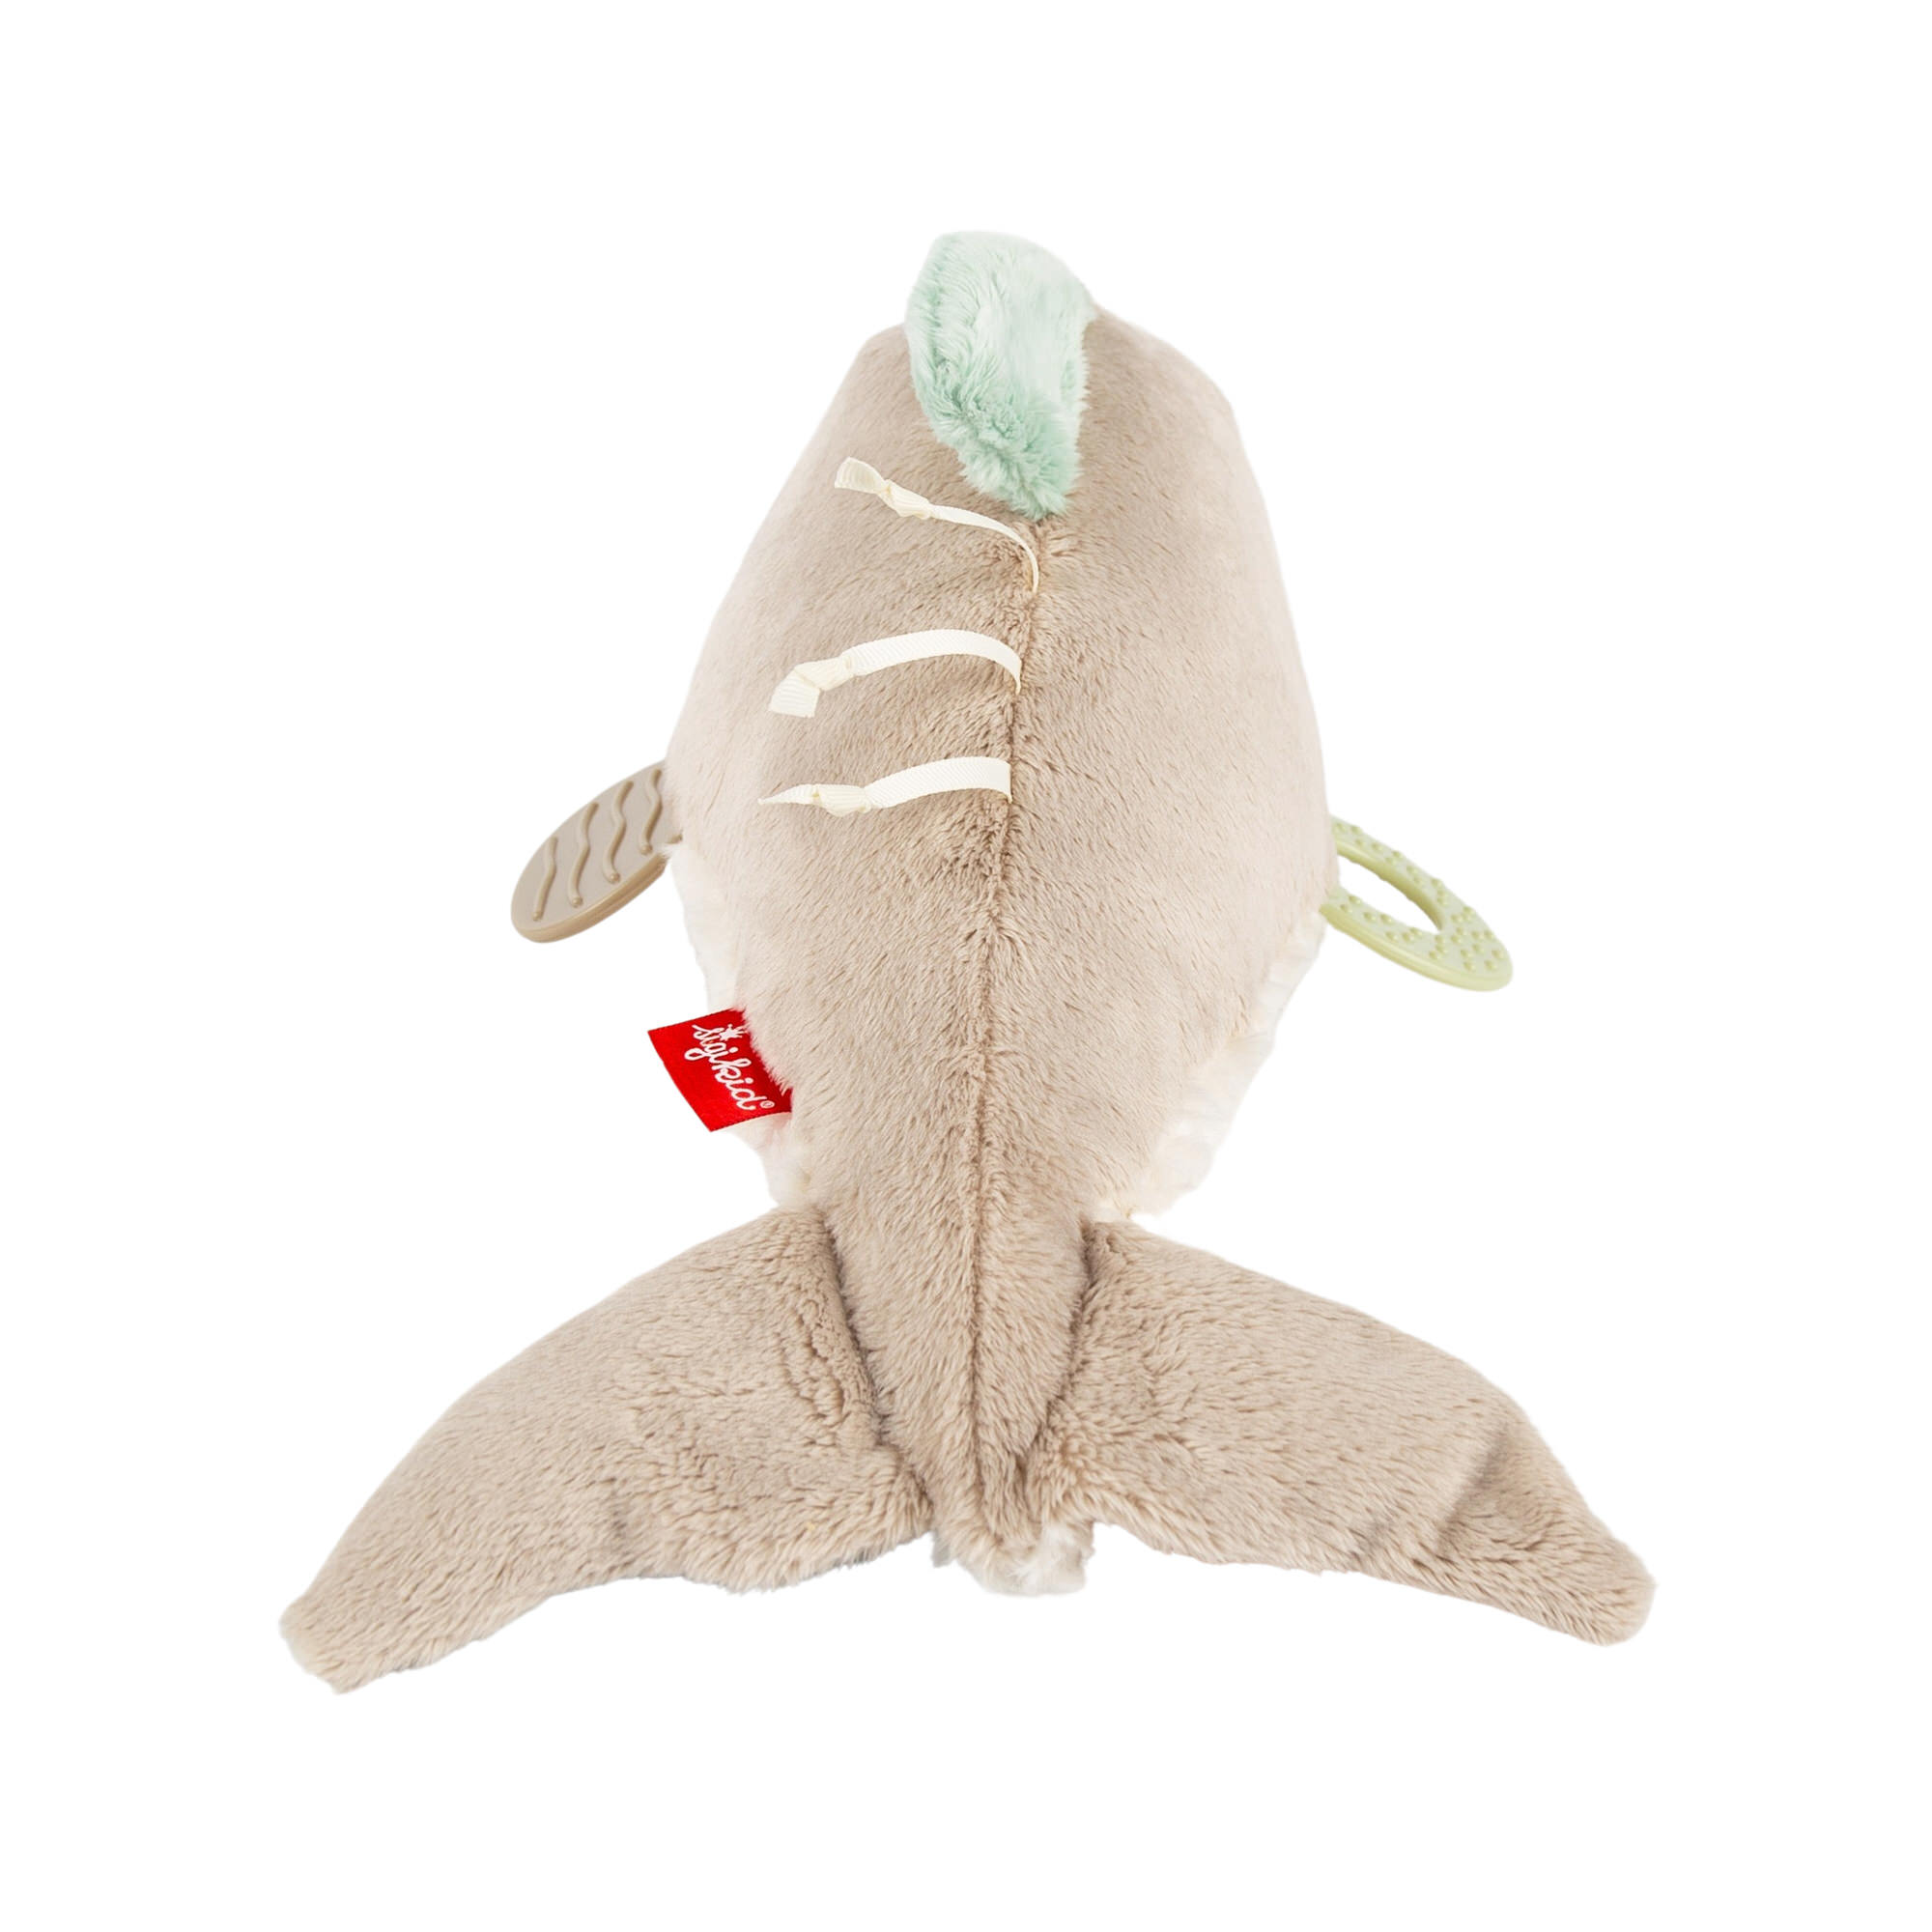 Baby activity plush toy dolphin